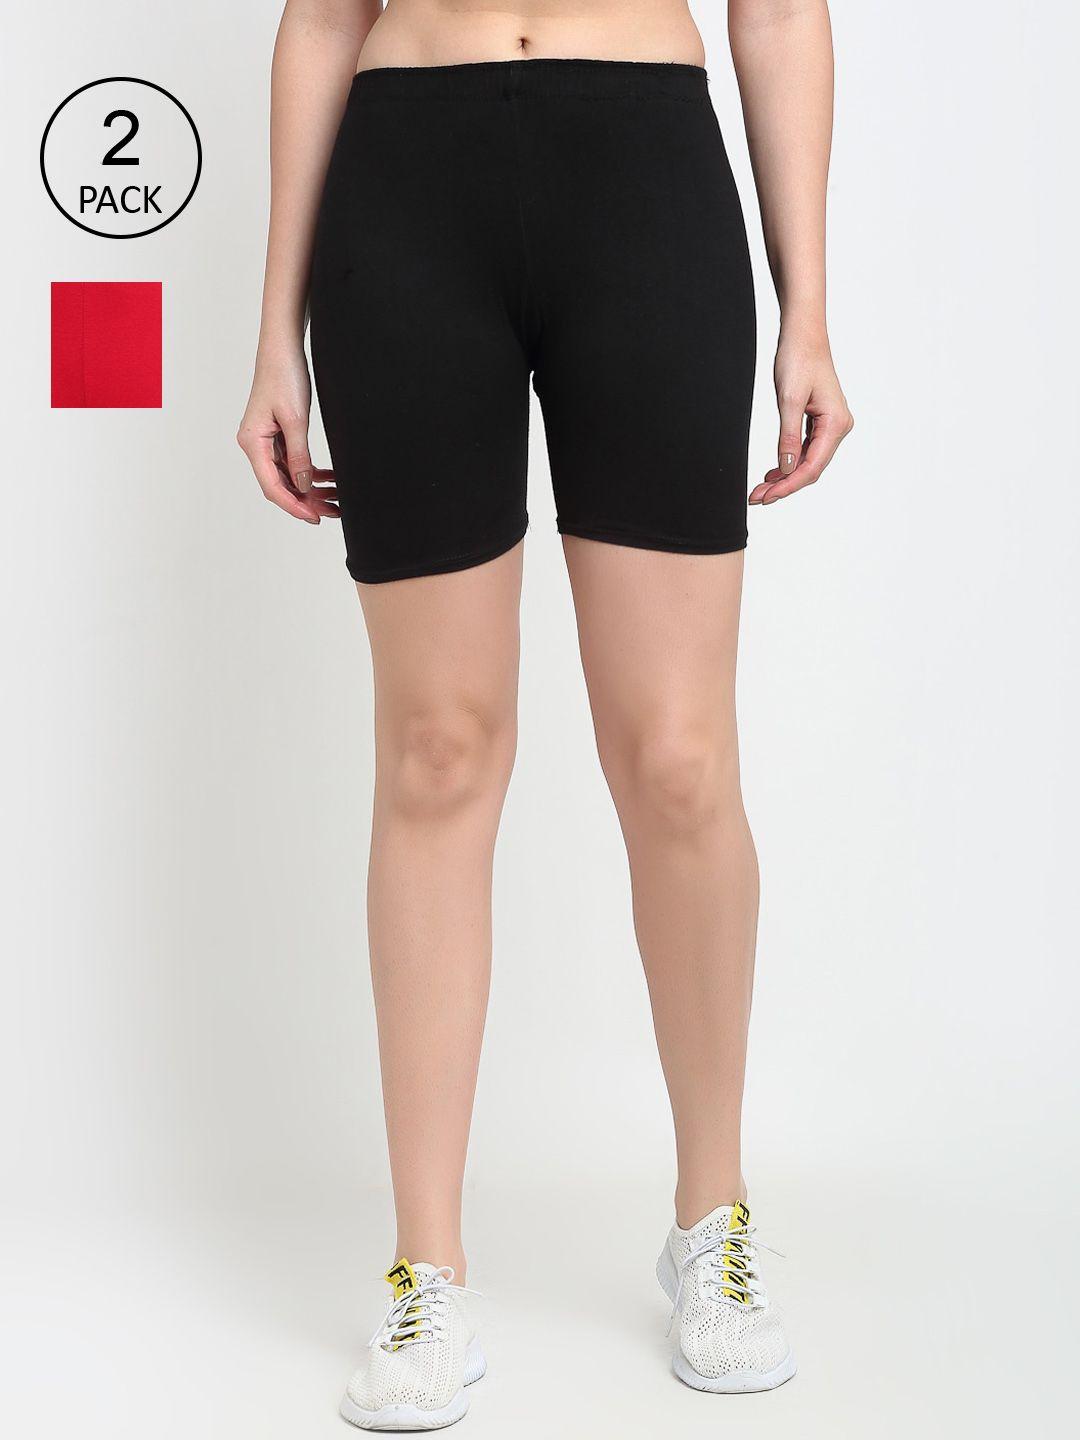 gracit women black & red set of 2 biker shorts